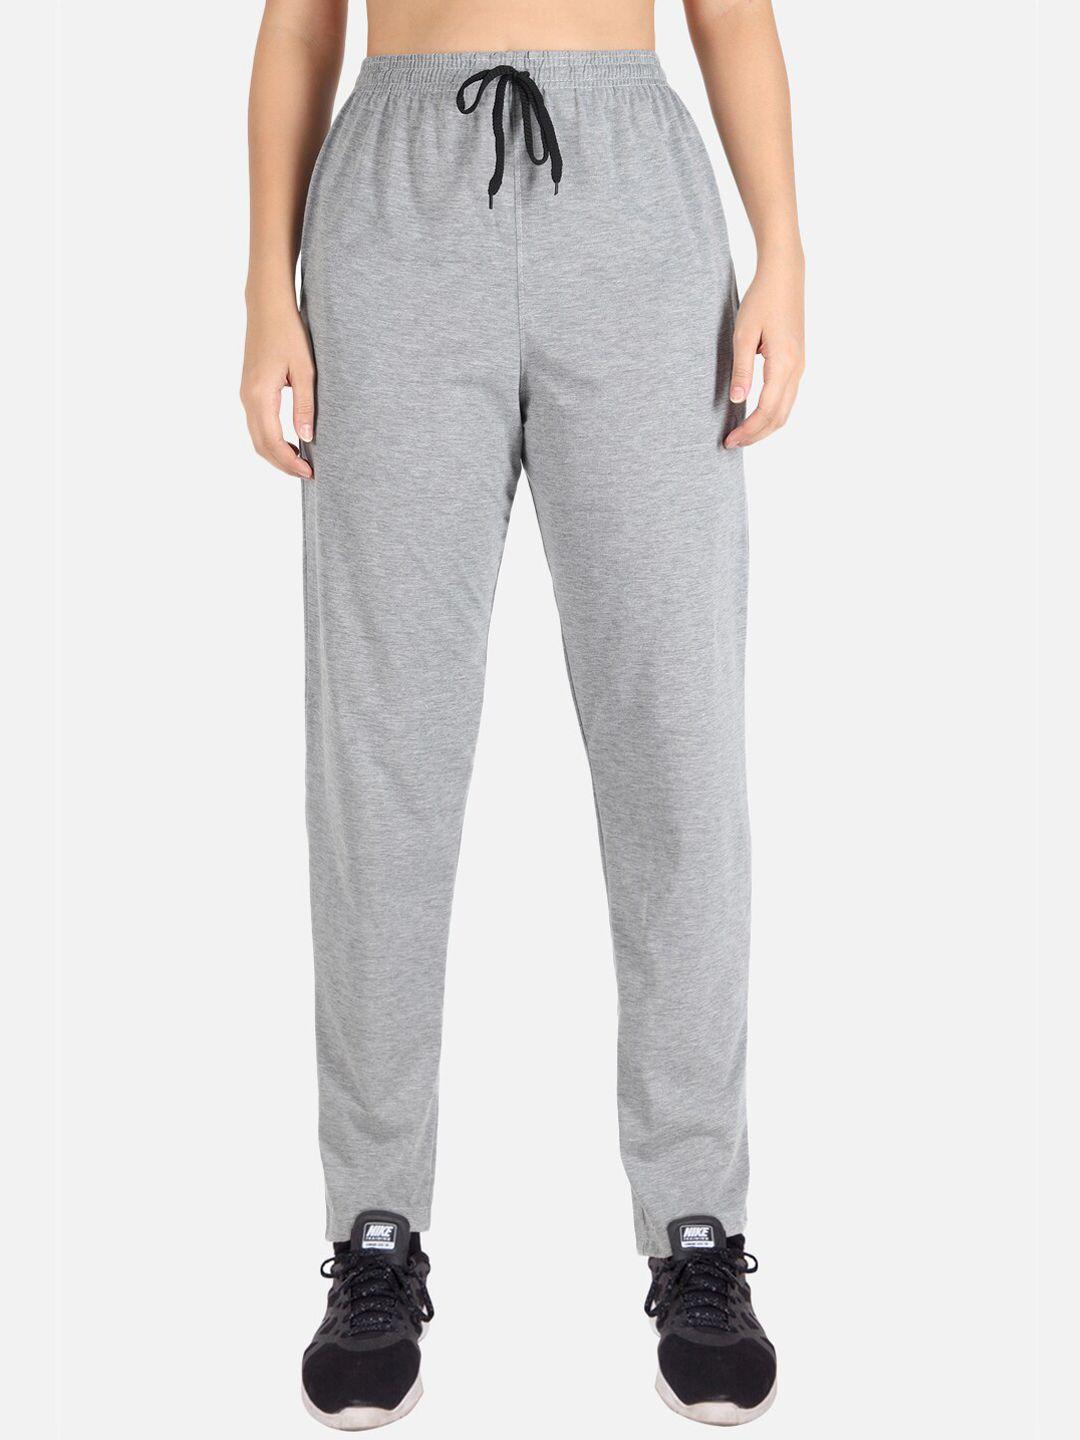 FFLIRTYGO Women Grey Melange Solid Relaxed Fit Cotton Track Pants